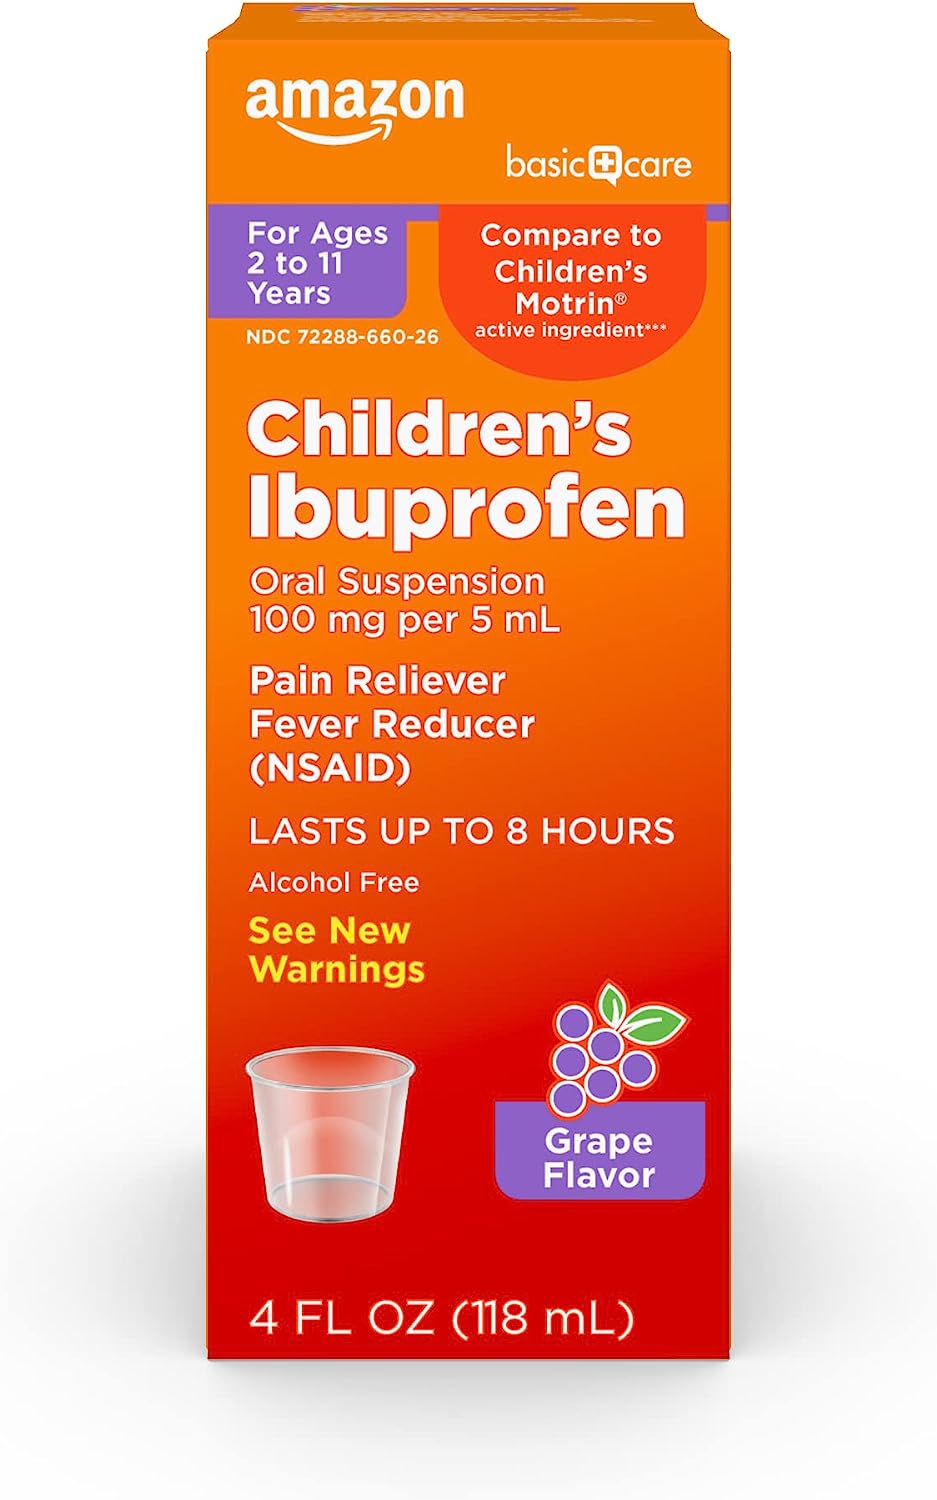 “Amazon Basic Care Children’s Ibuprofen Oral Suspension: Grape Flavor, Pain Relief for Kids 2-11, Lasts 8 Hours – Gluten Free”